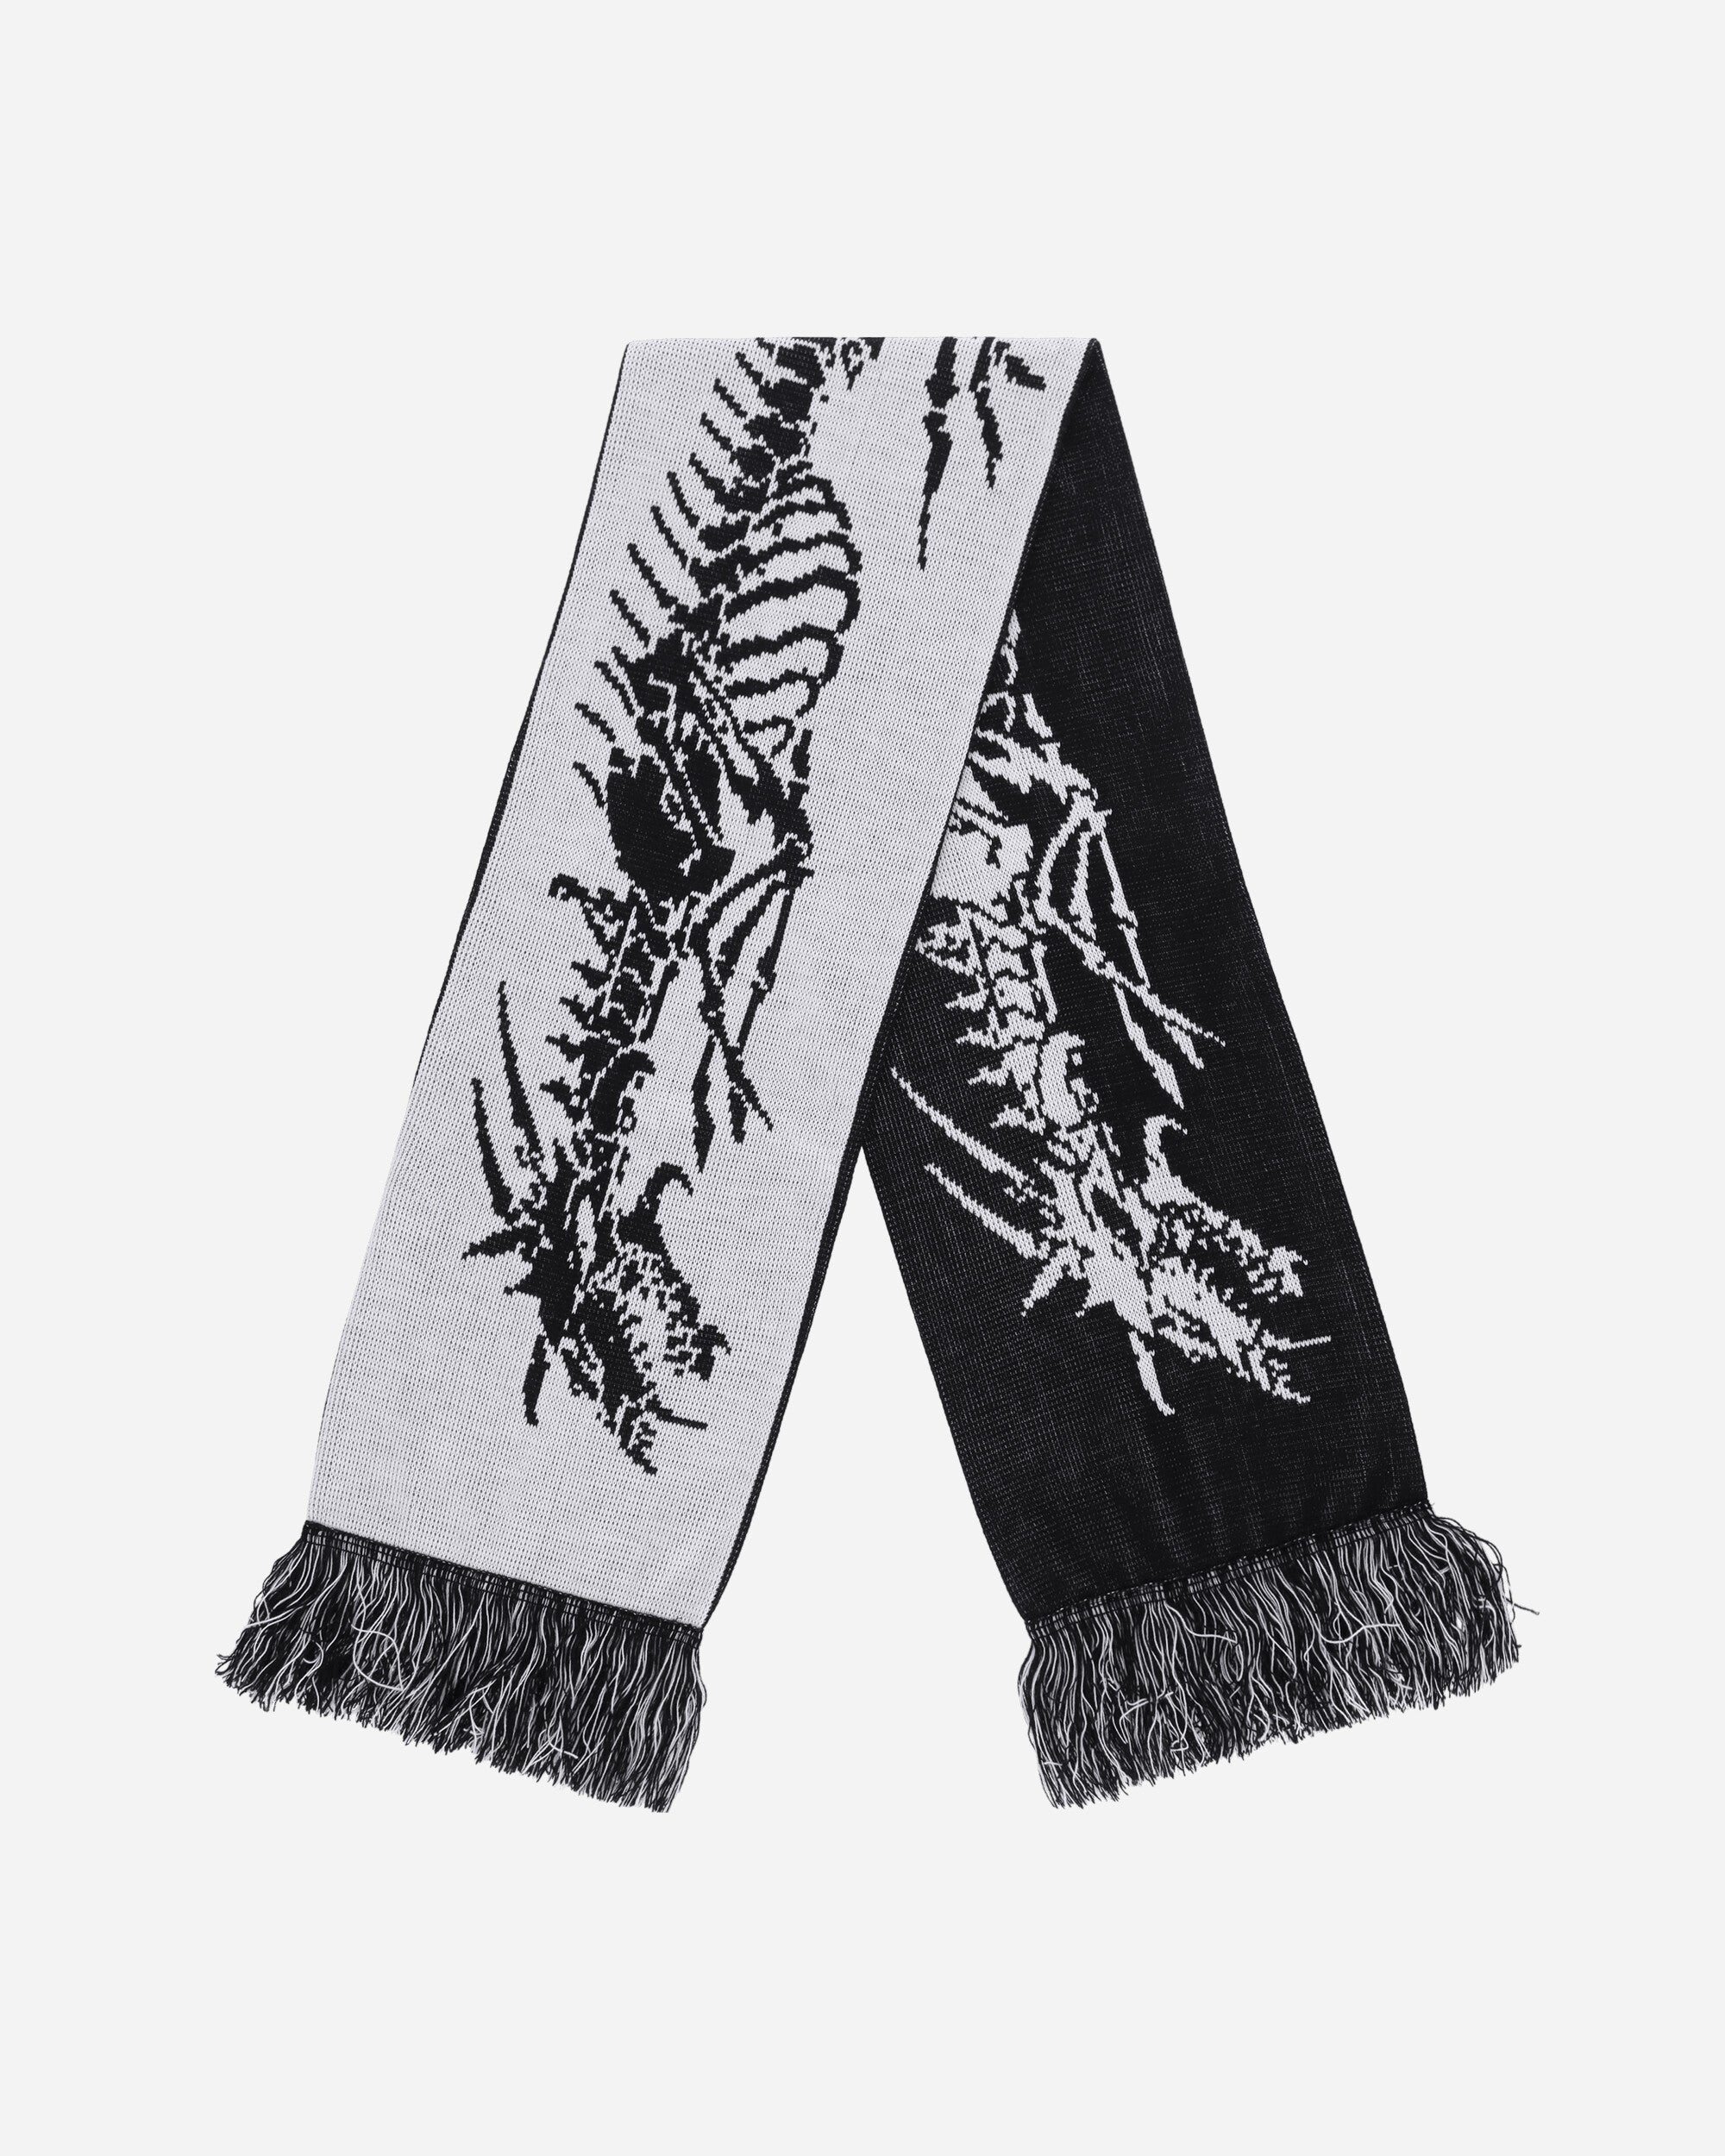 Aries Dragon Skeleton Scarf Black & White Gloves and Scarves Scarves and Warmneck SUAR90001 BLKWHT